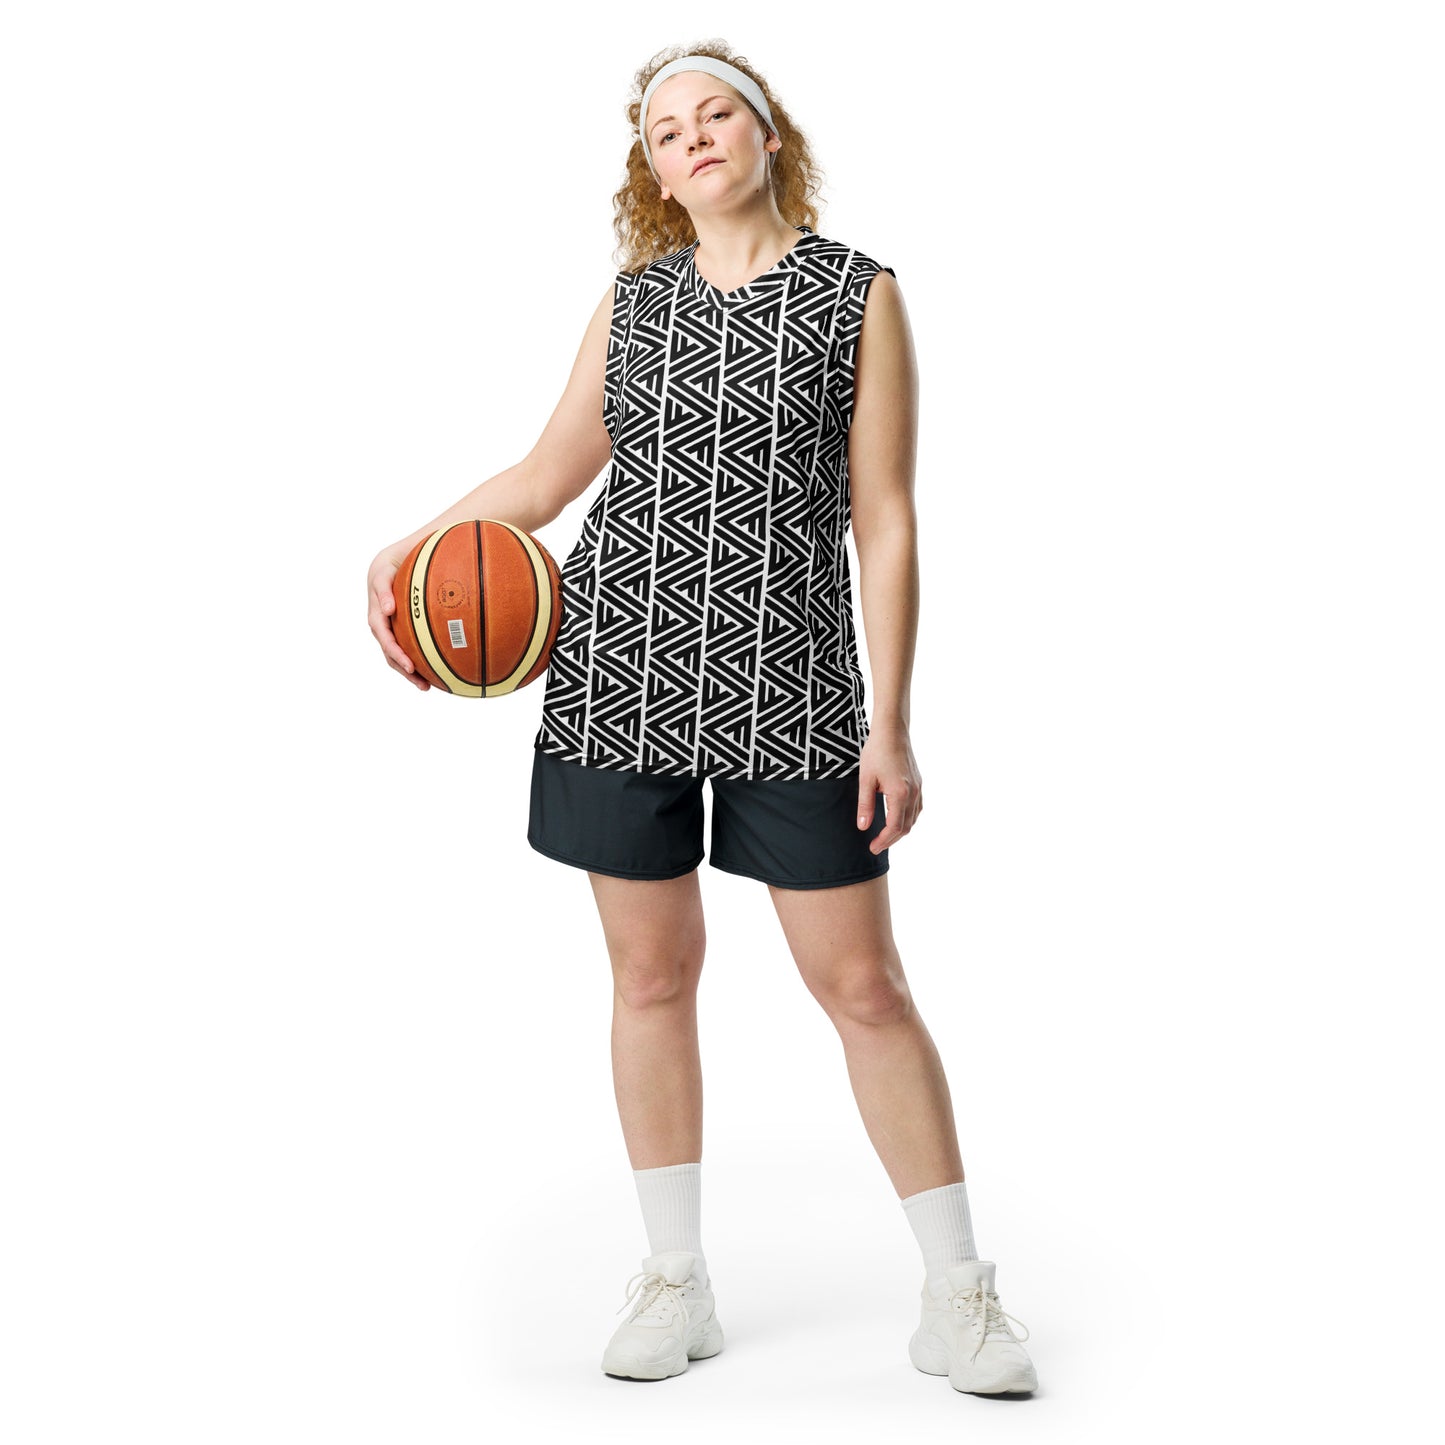 FV Recycled unisex basketball jersey